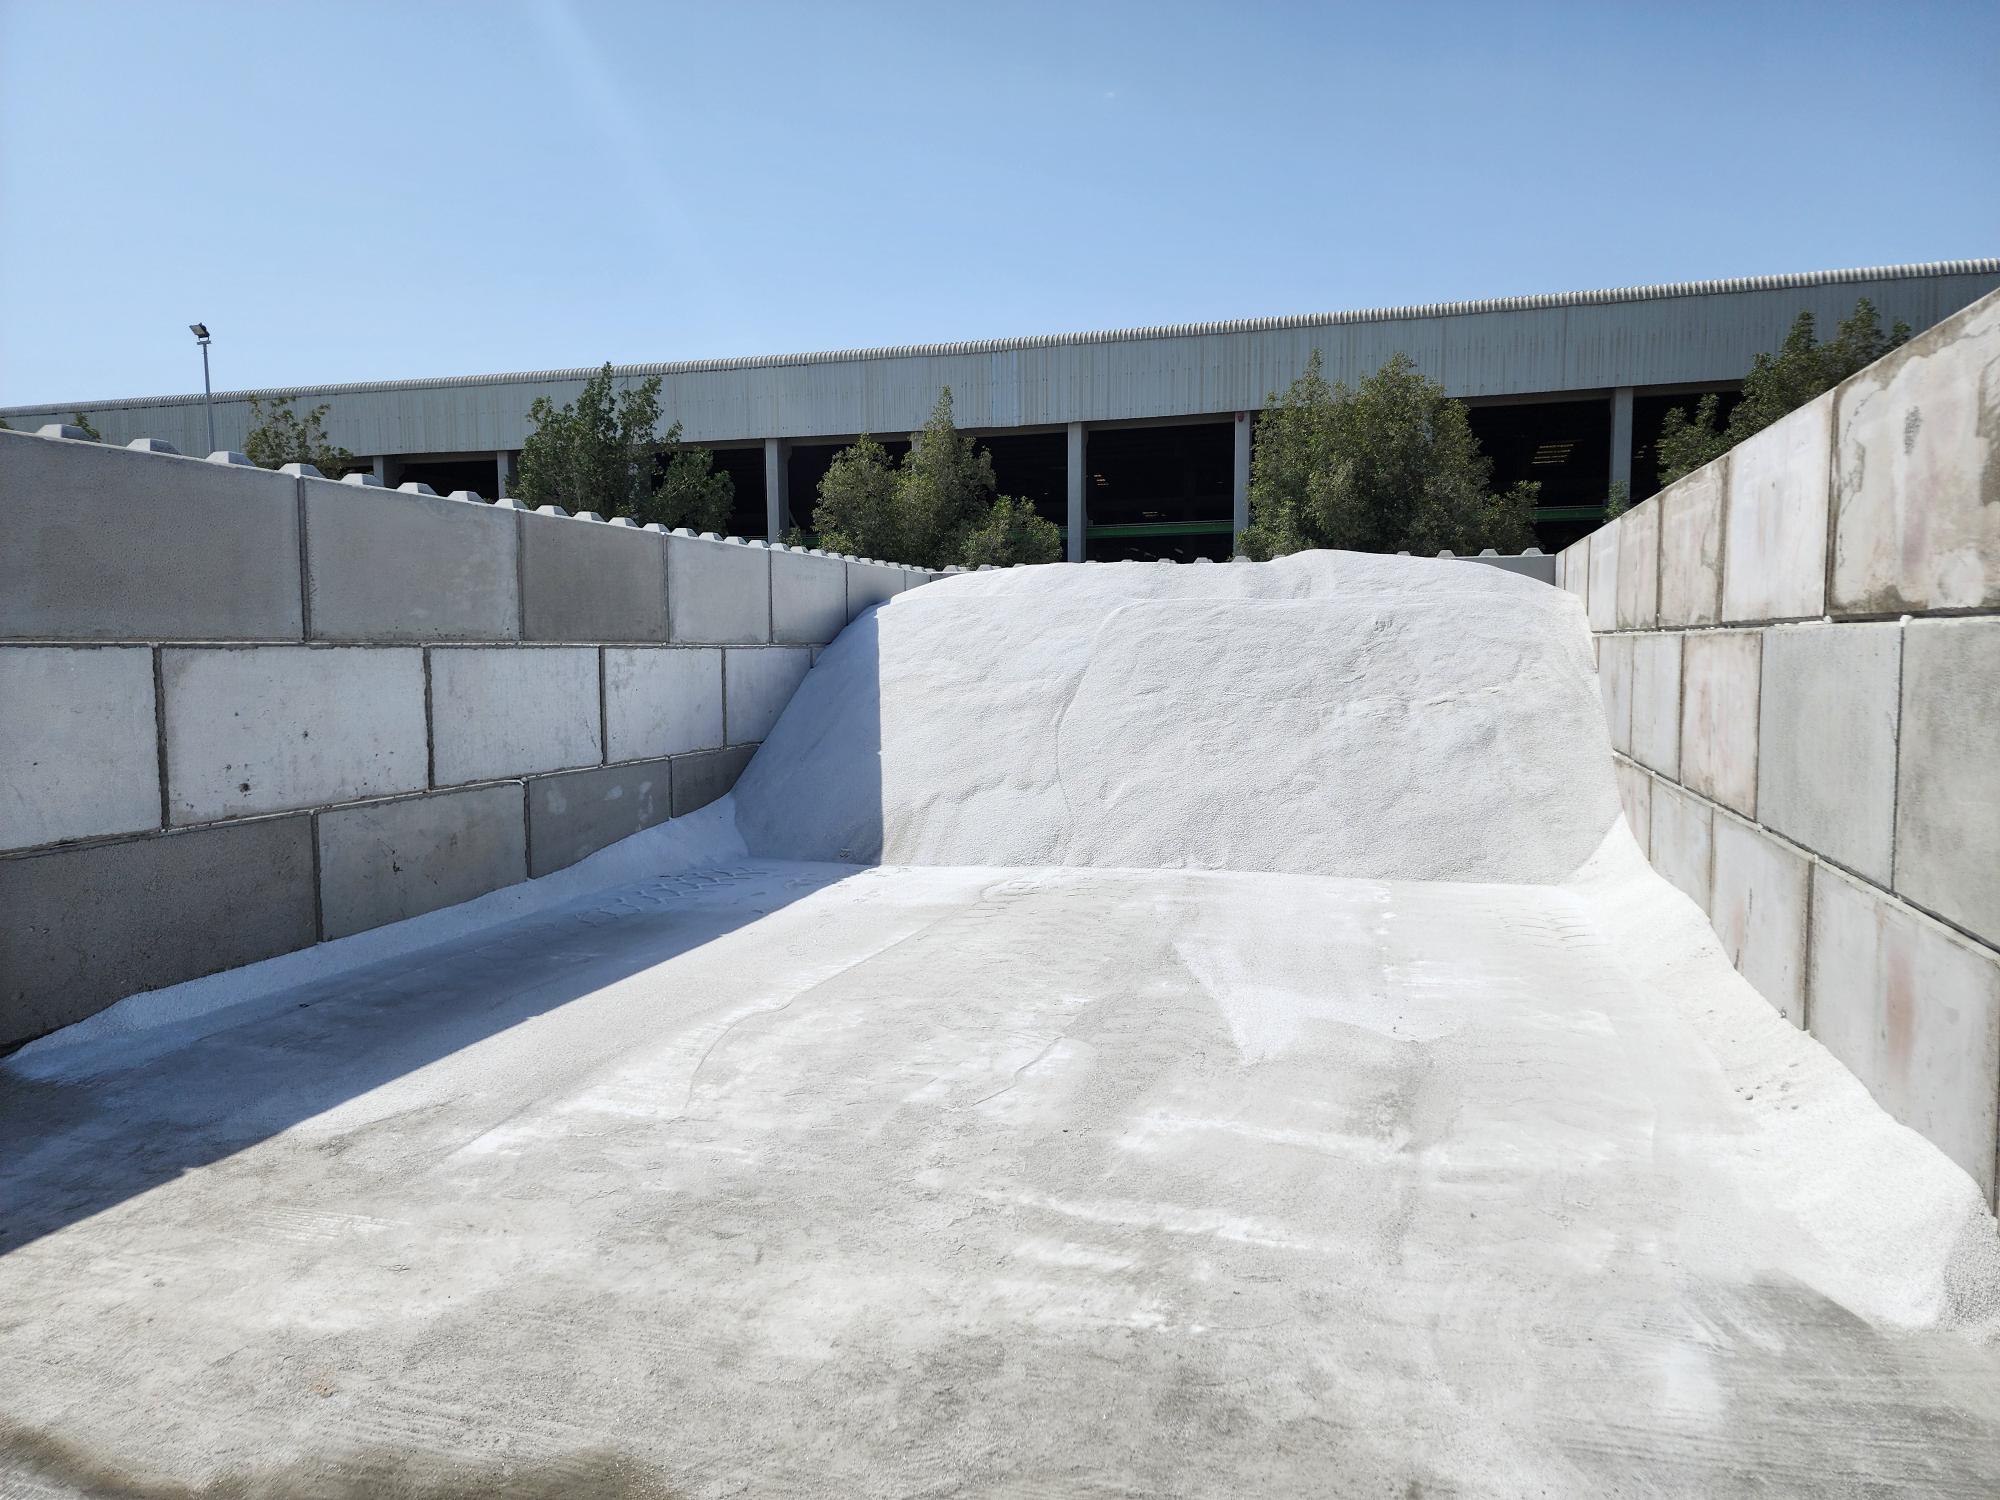 material storage bays concrete blocks